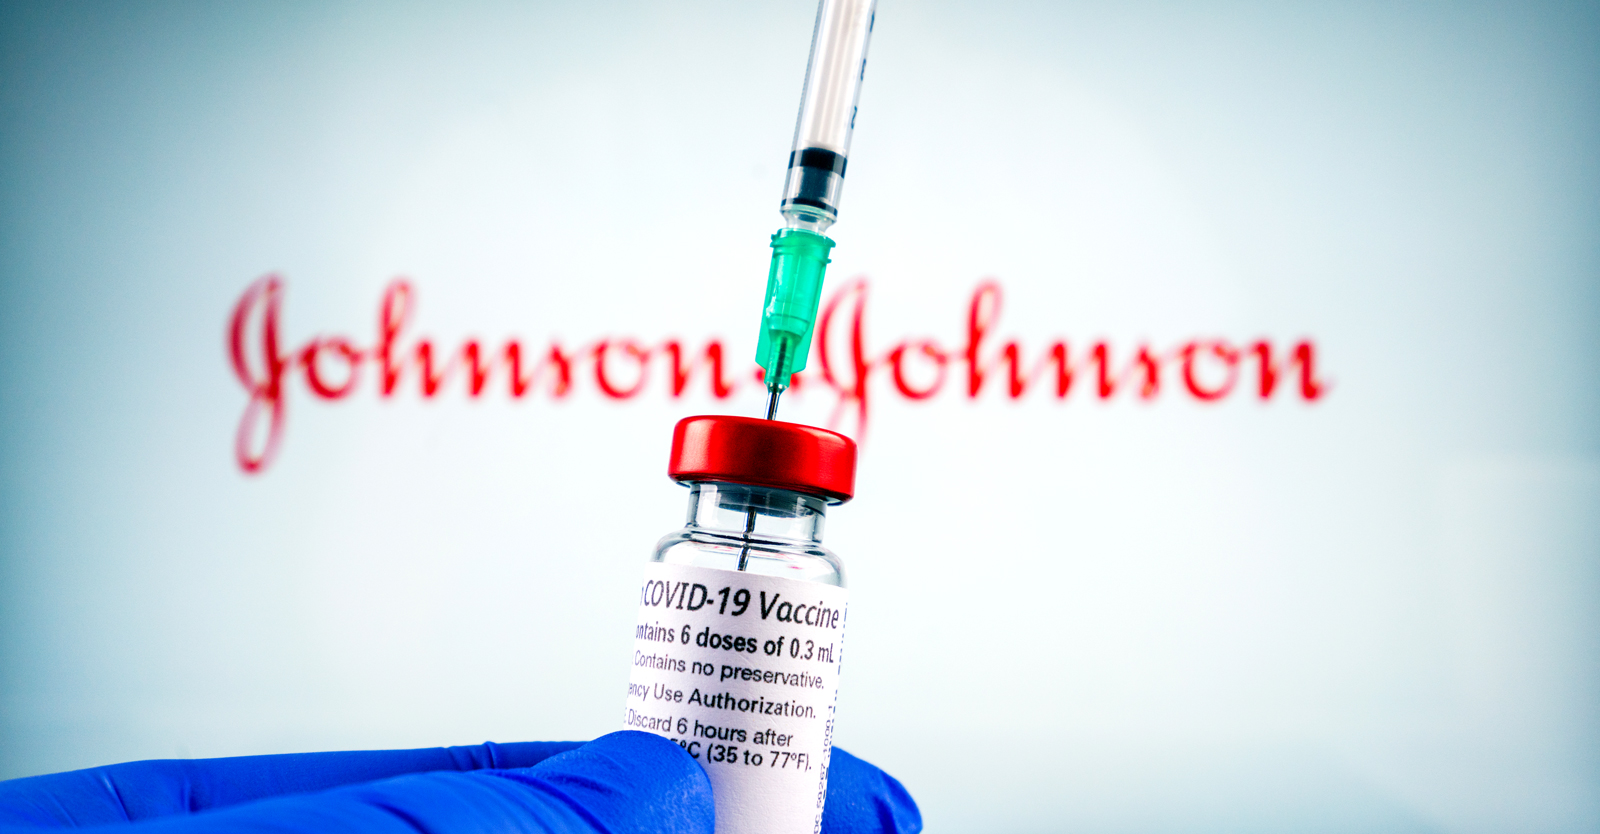 Public concerns over J&J vaccine are widespread - Report